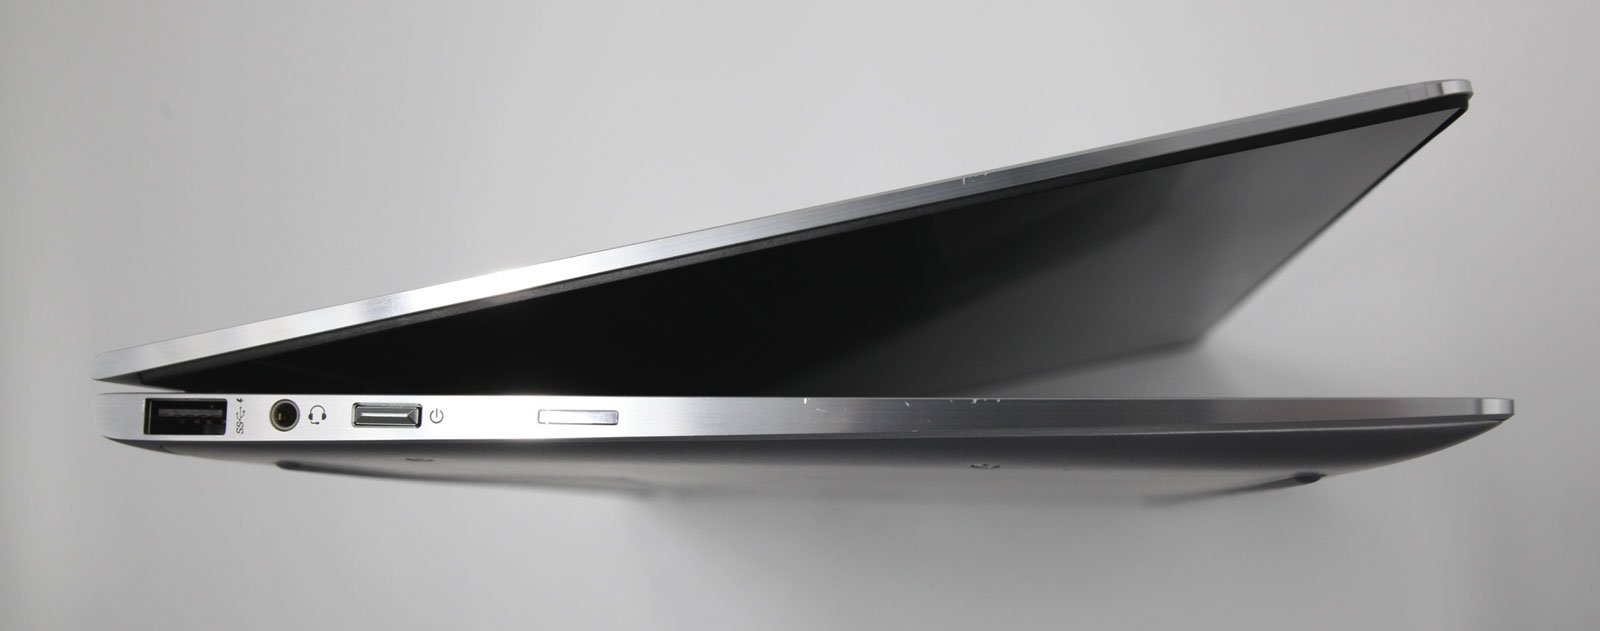 HP EliteBook x360 1030 G4 Privacy Touch: 8th Gen i7 512GB 16GB RAM Warranty - CruiseTech